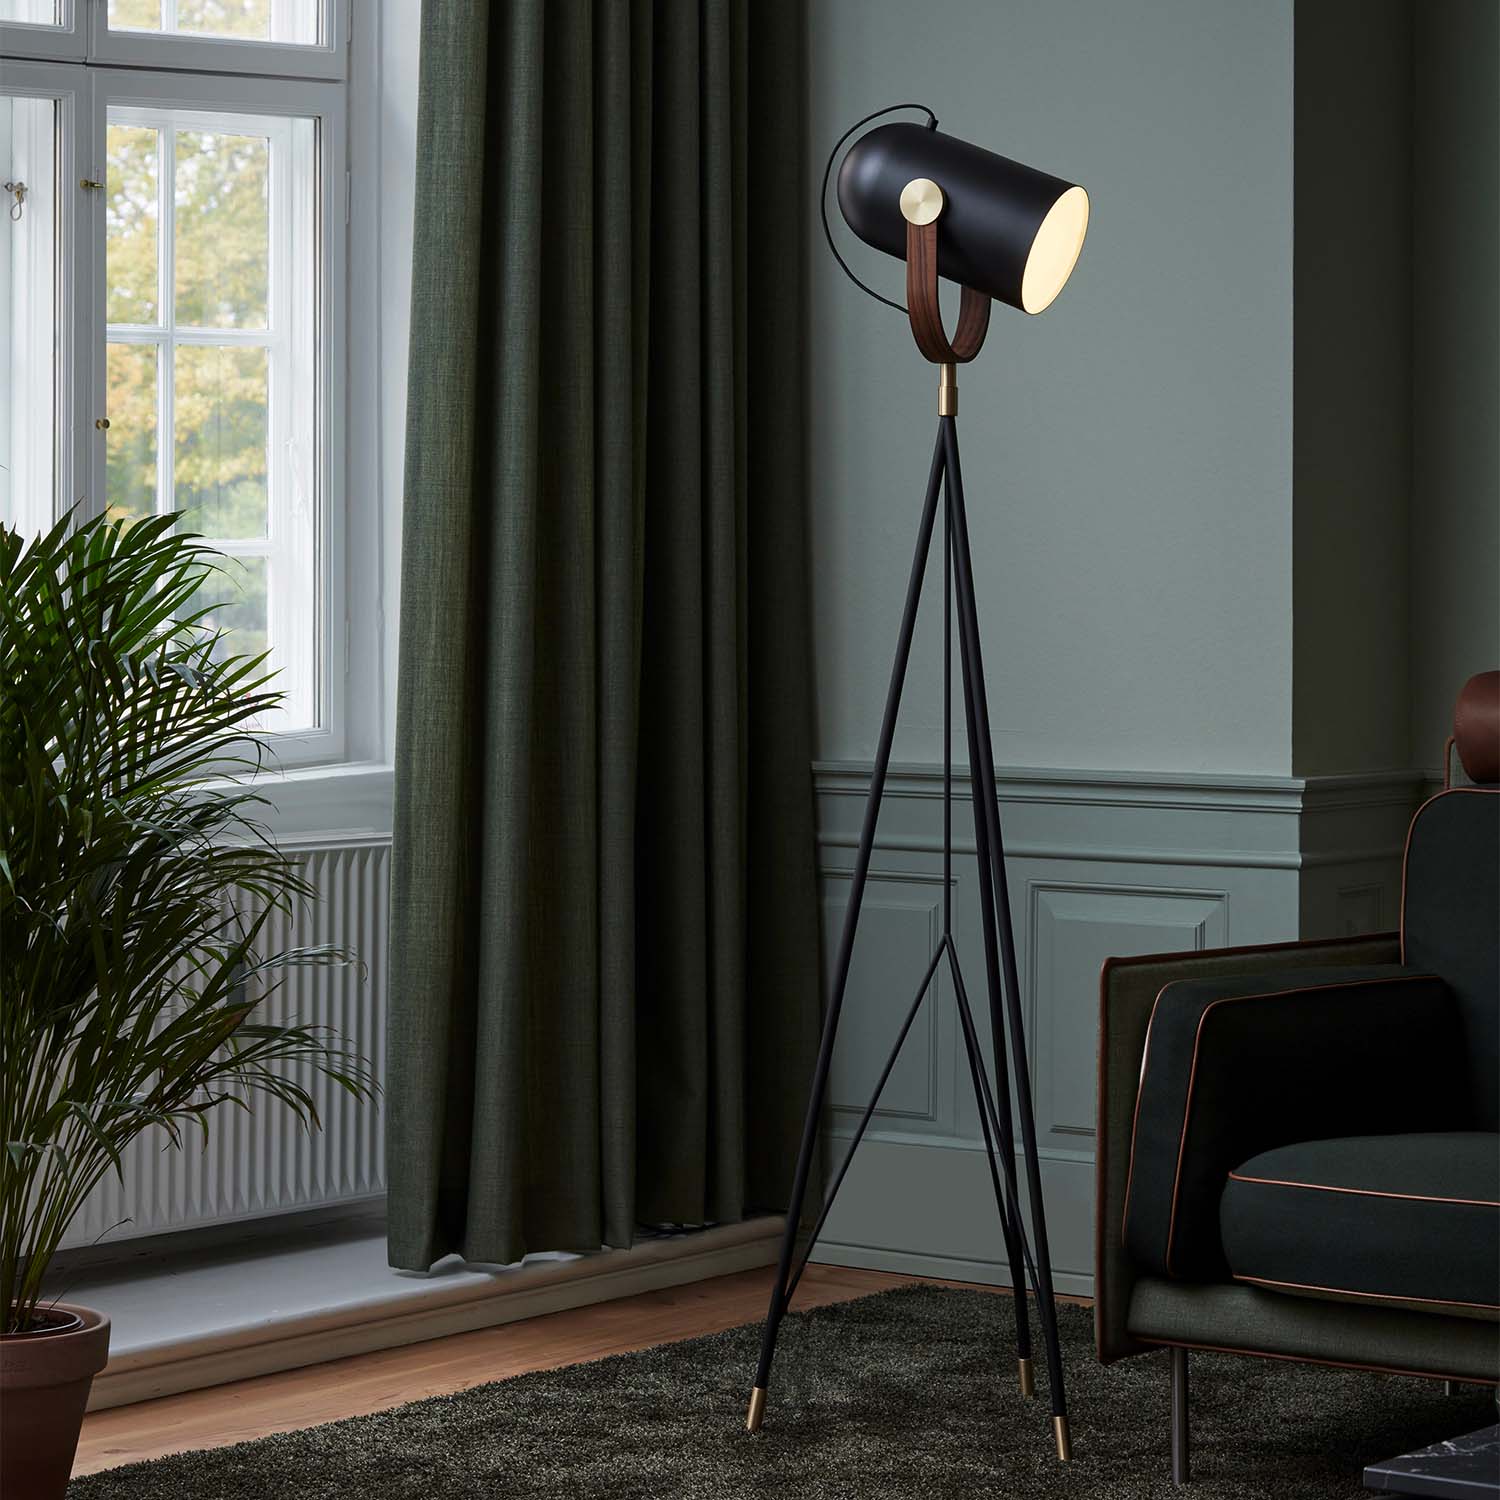 CARRONADE - Vintage projector floor lamp, living room or adult bedroom